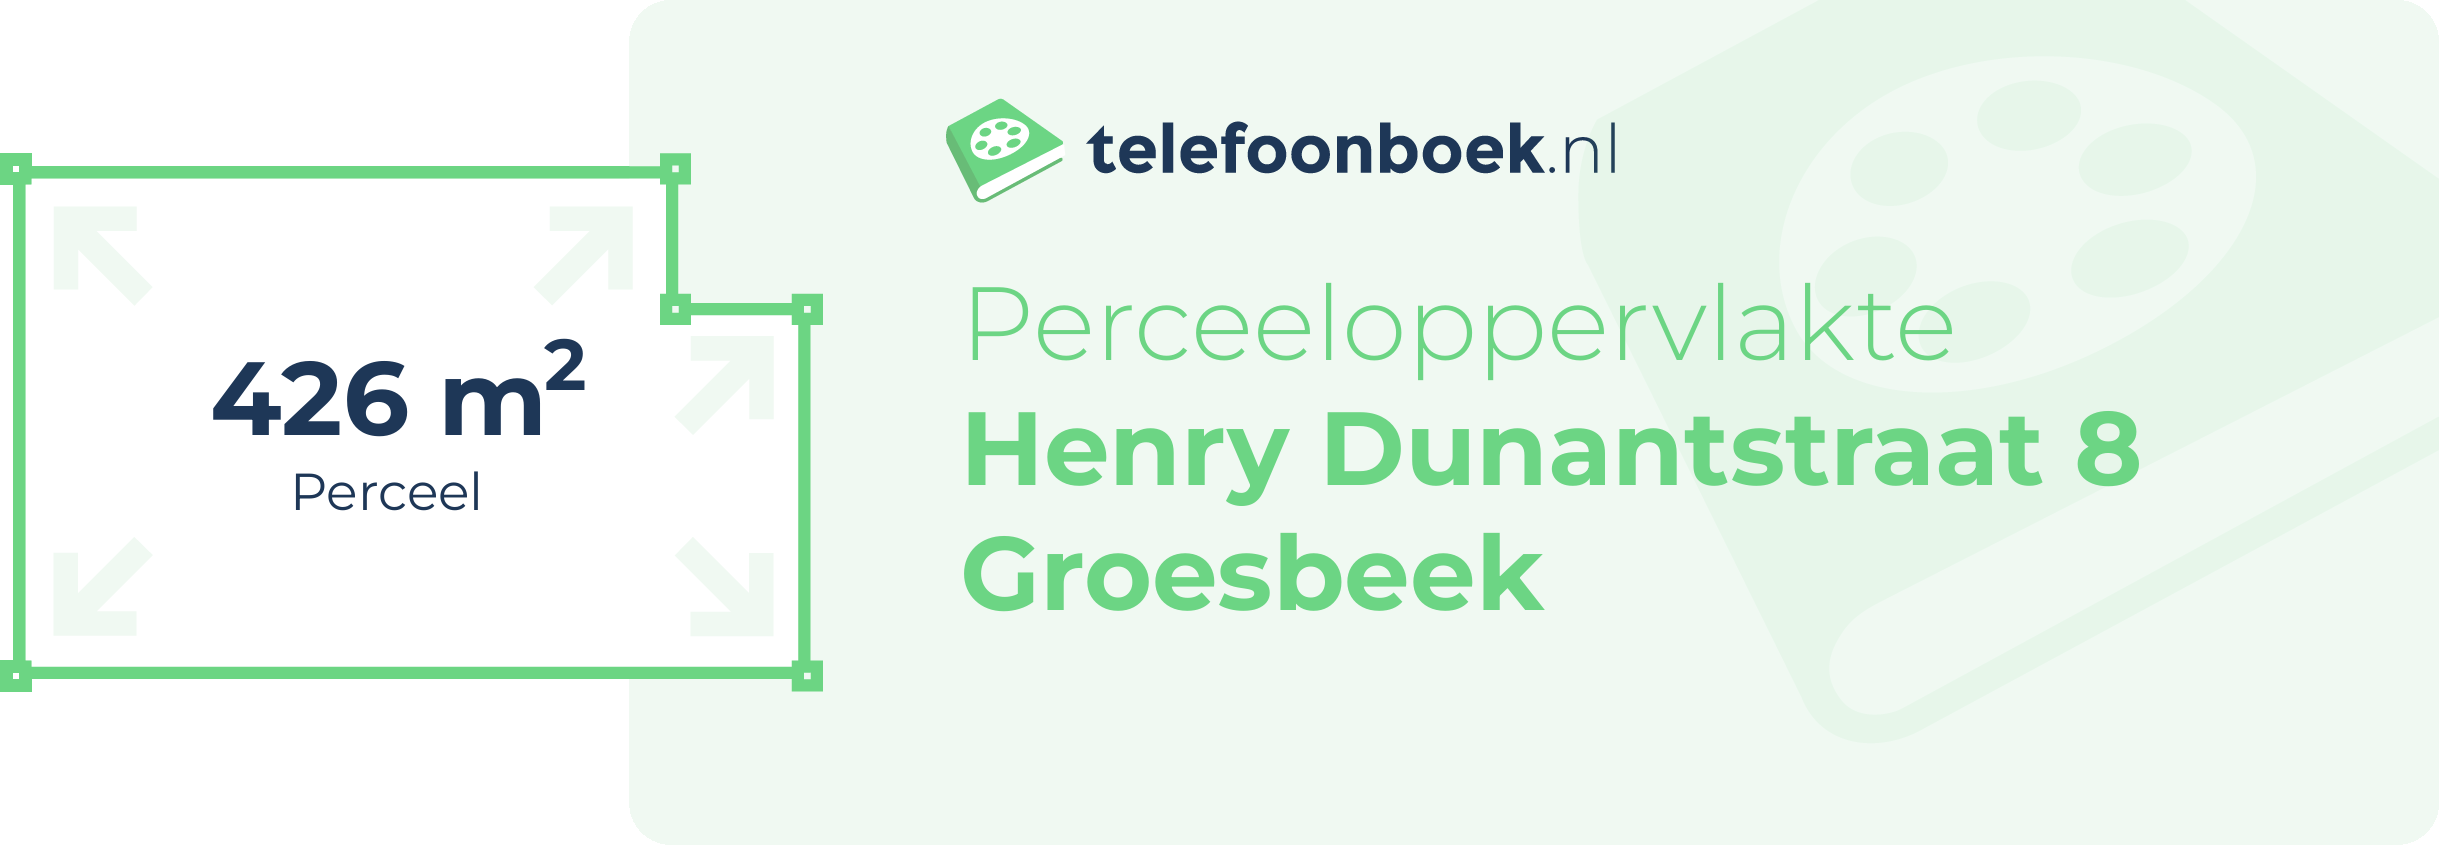 Perceeloppervlakte Henry Dunantstraat 8 Groesbeek